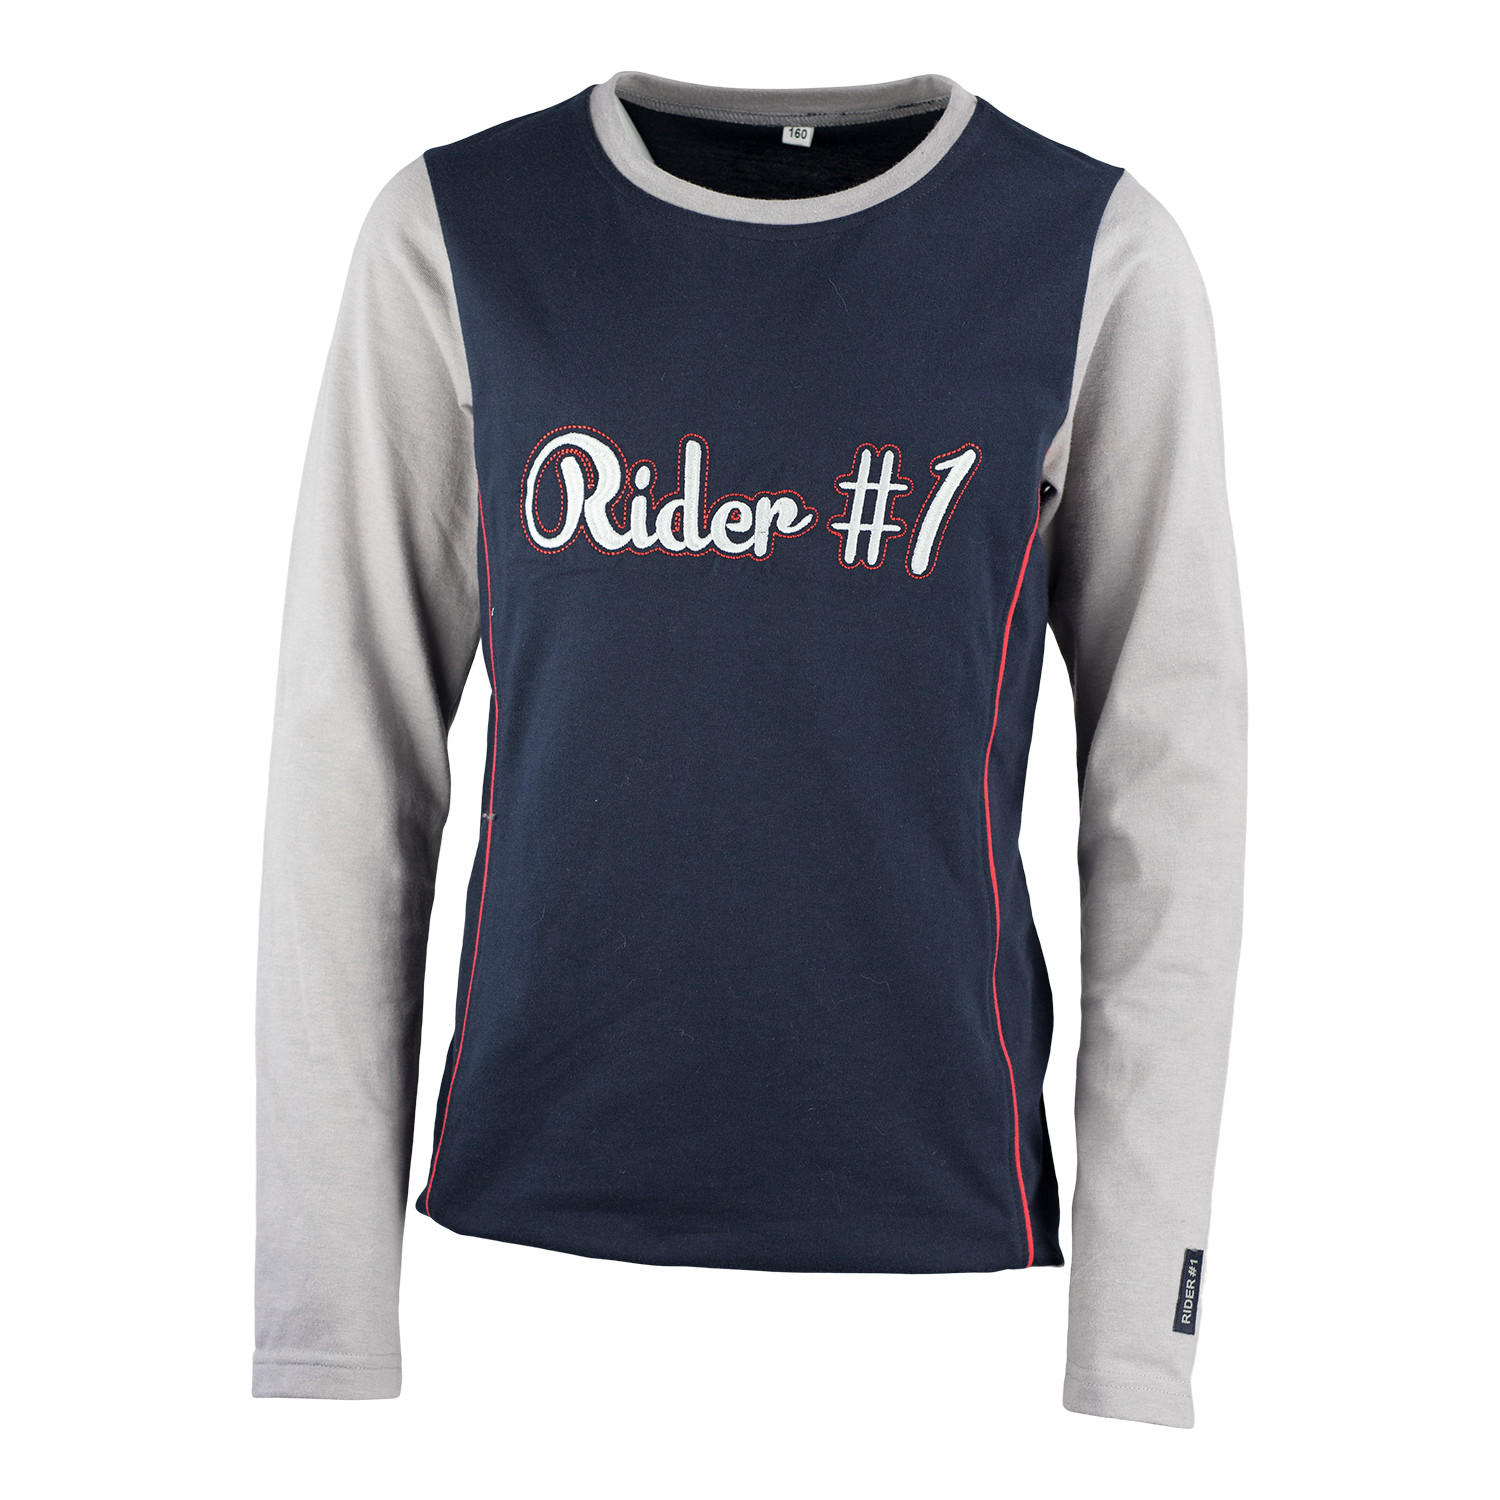 T-shirt Rider # 1